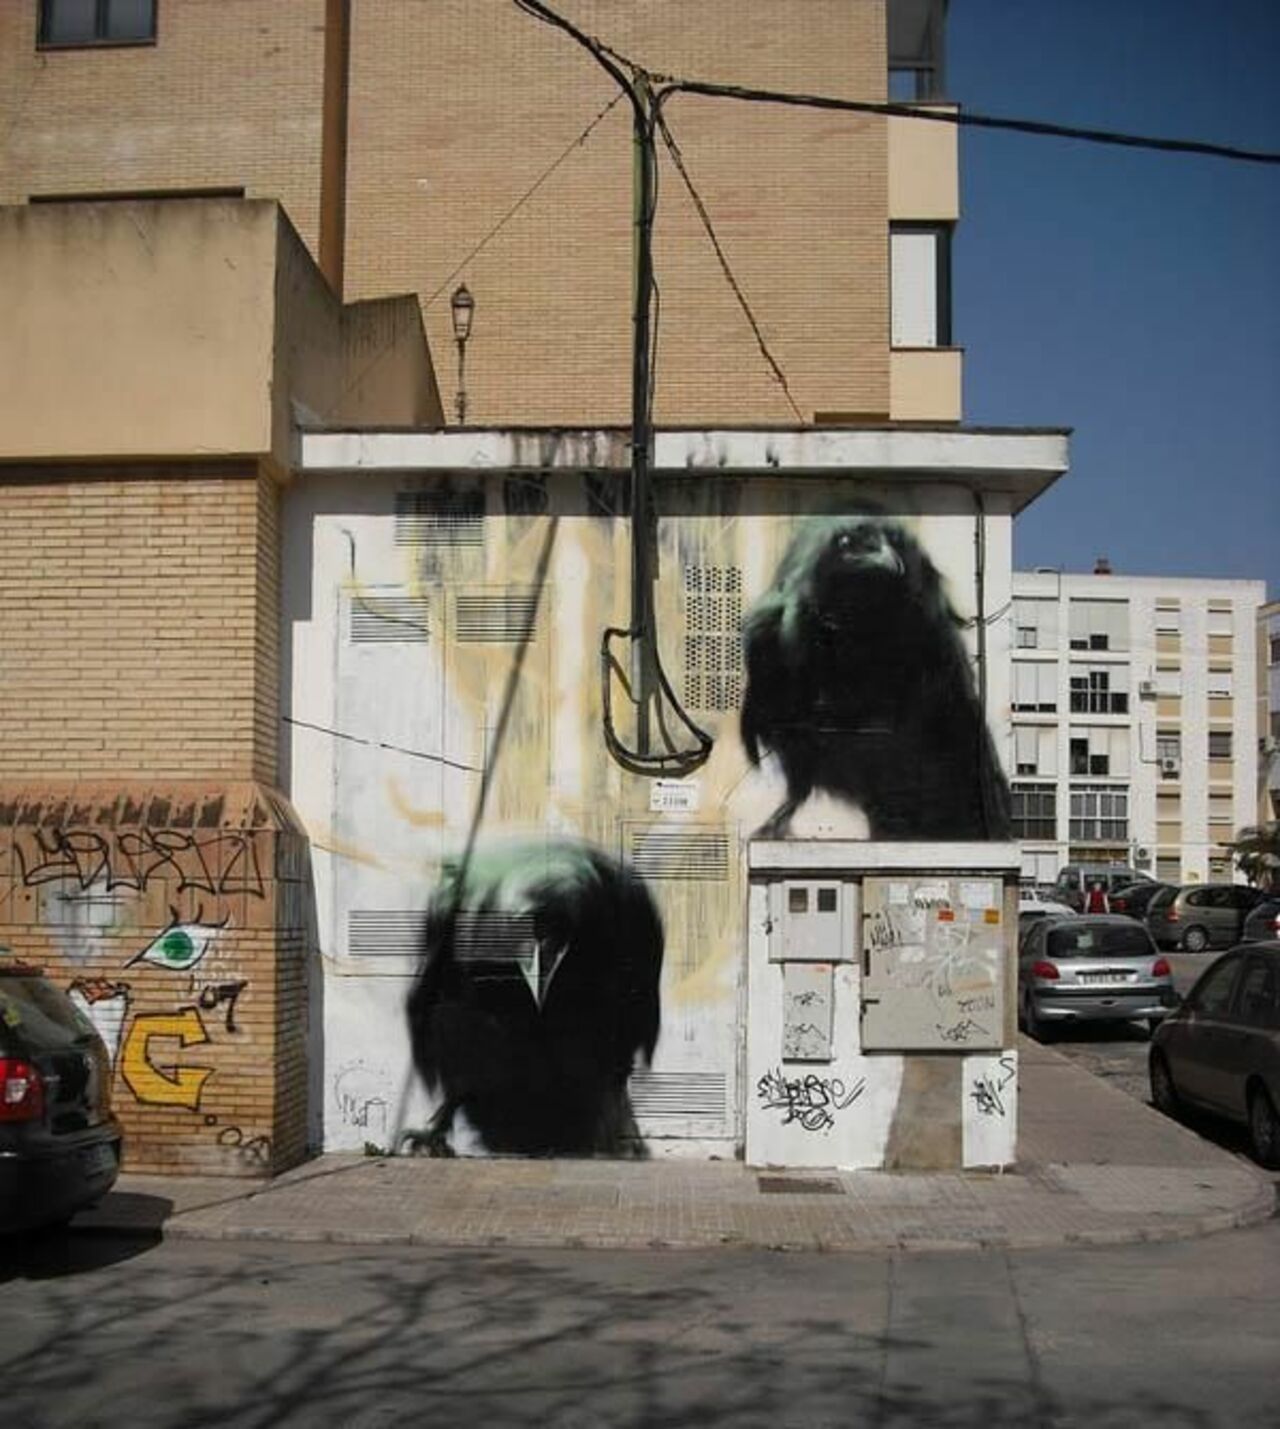 M-E-S-A, Street Art https://twib.in/l/ngpaekA4oeL #art #design #graffiti http://t.co/Uc5QpuYh1x